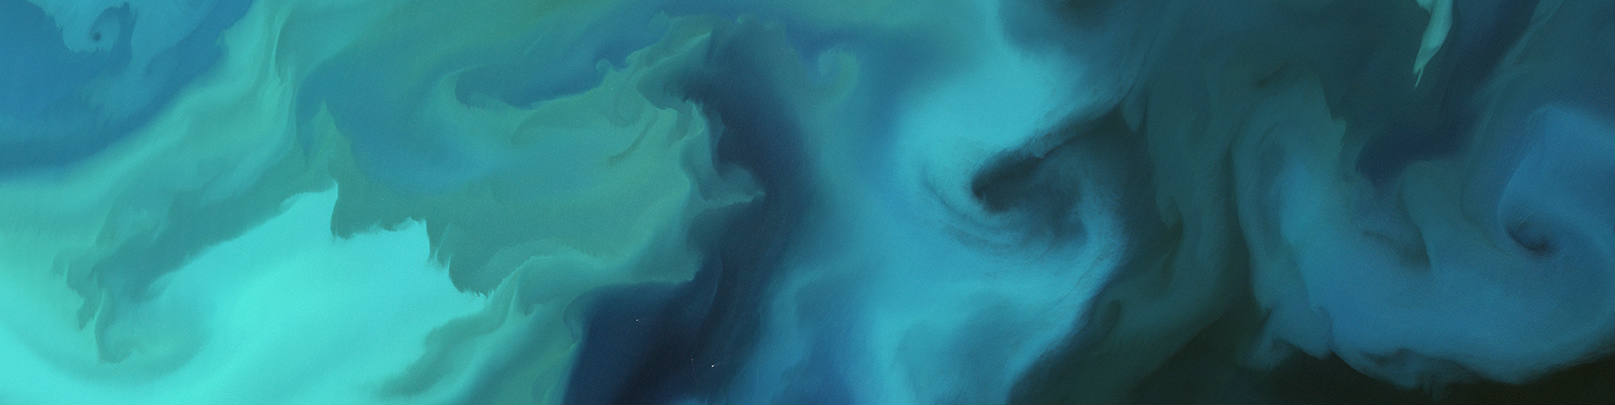 ESA - Algal bloom - Barents Sea - THIN BANNER